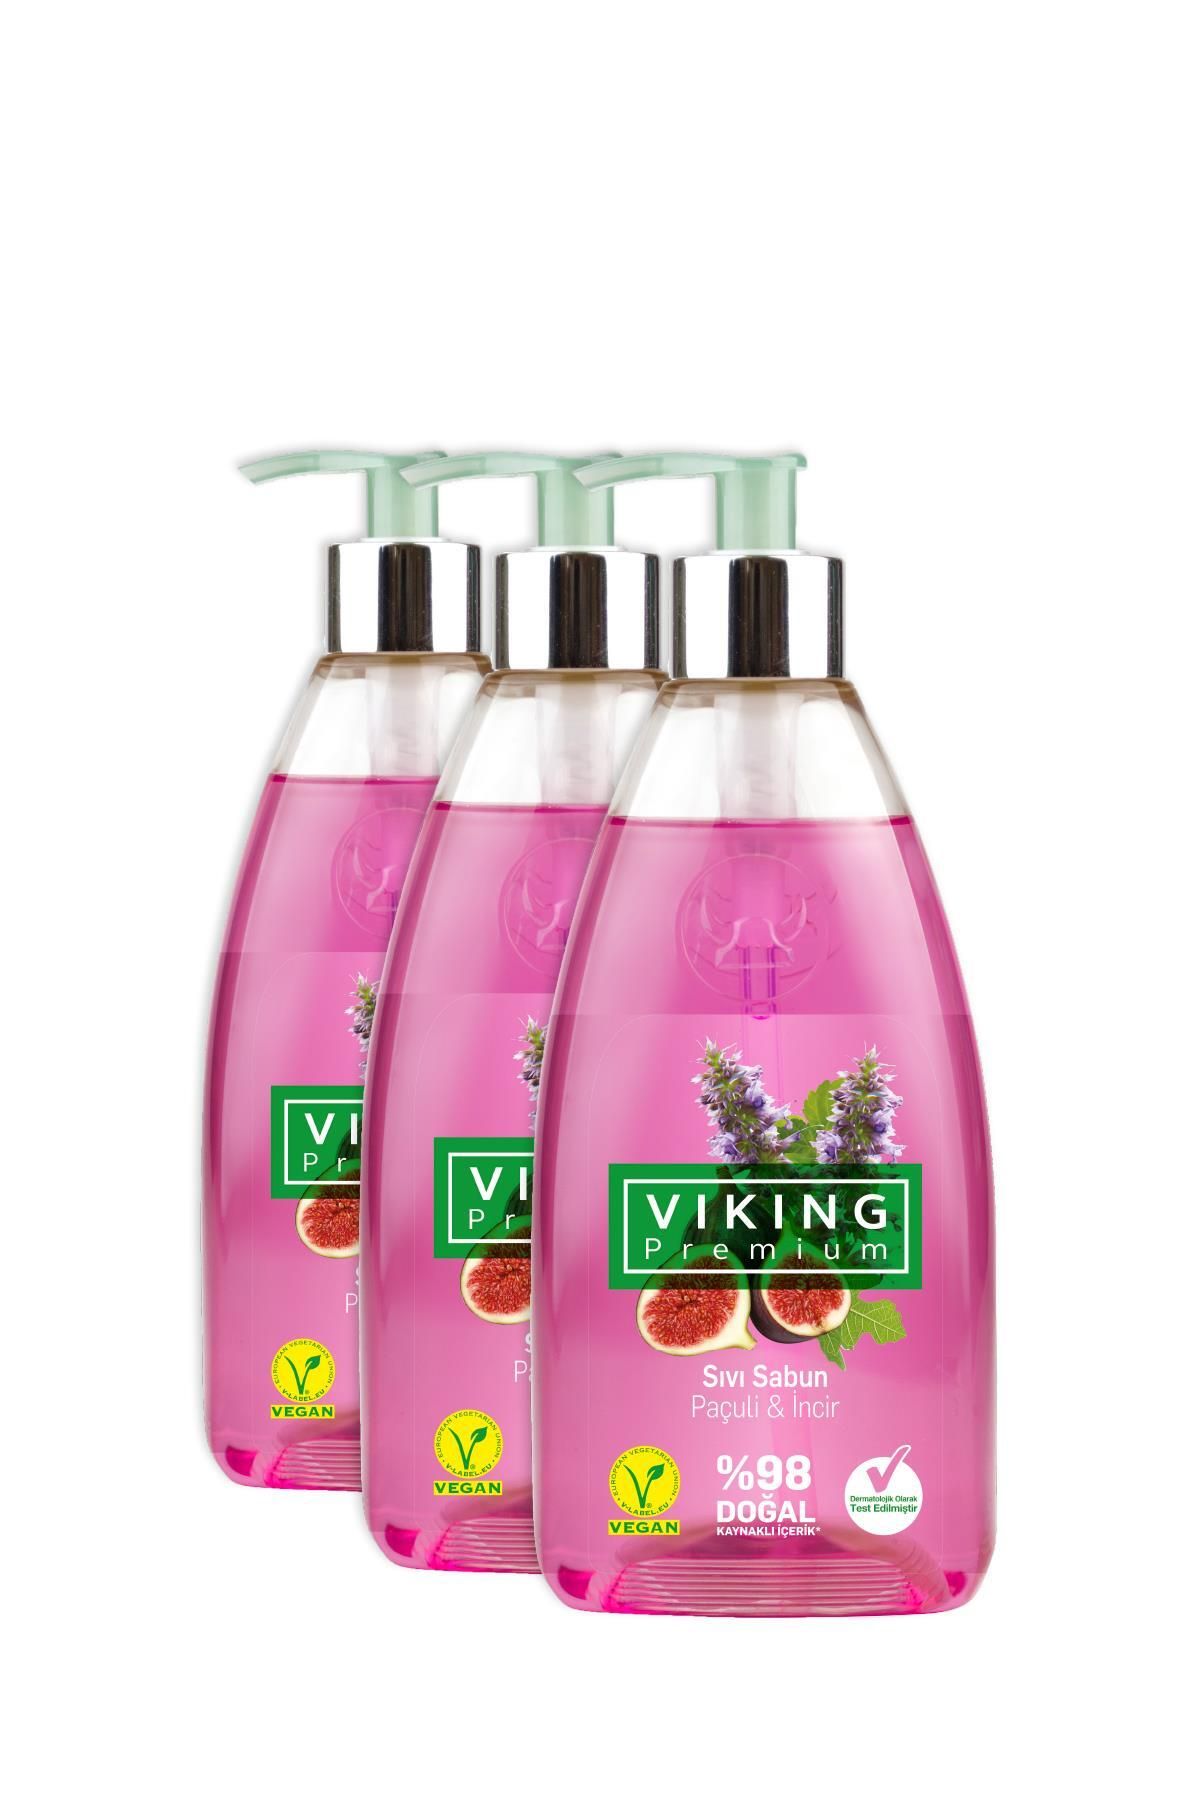 Viking Premium Sıvı Sabun Paçuli & Incir 500 Ml 3 Adet